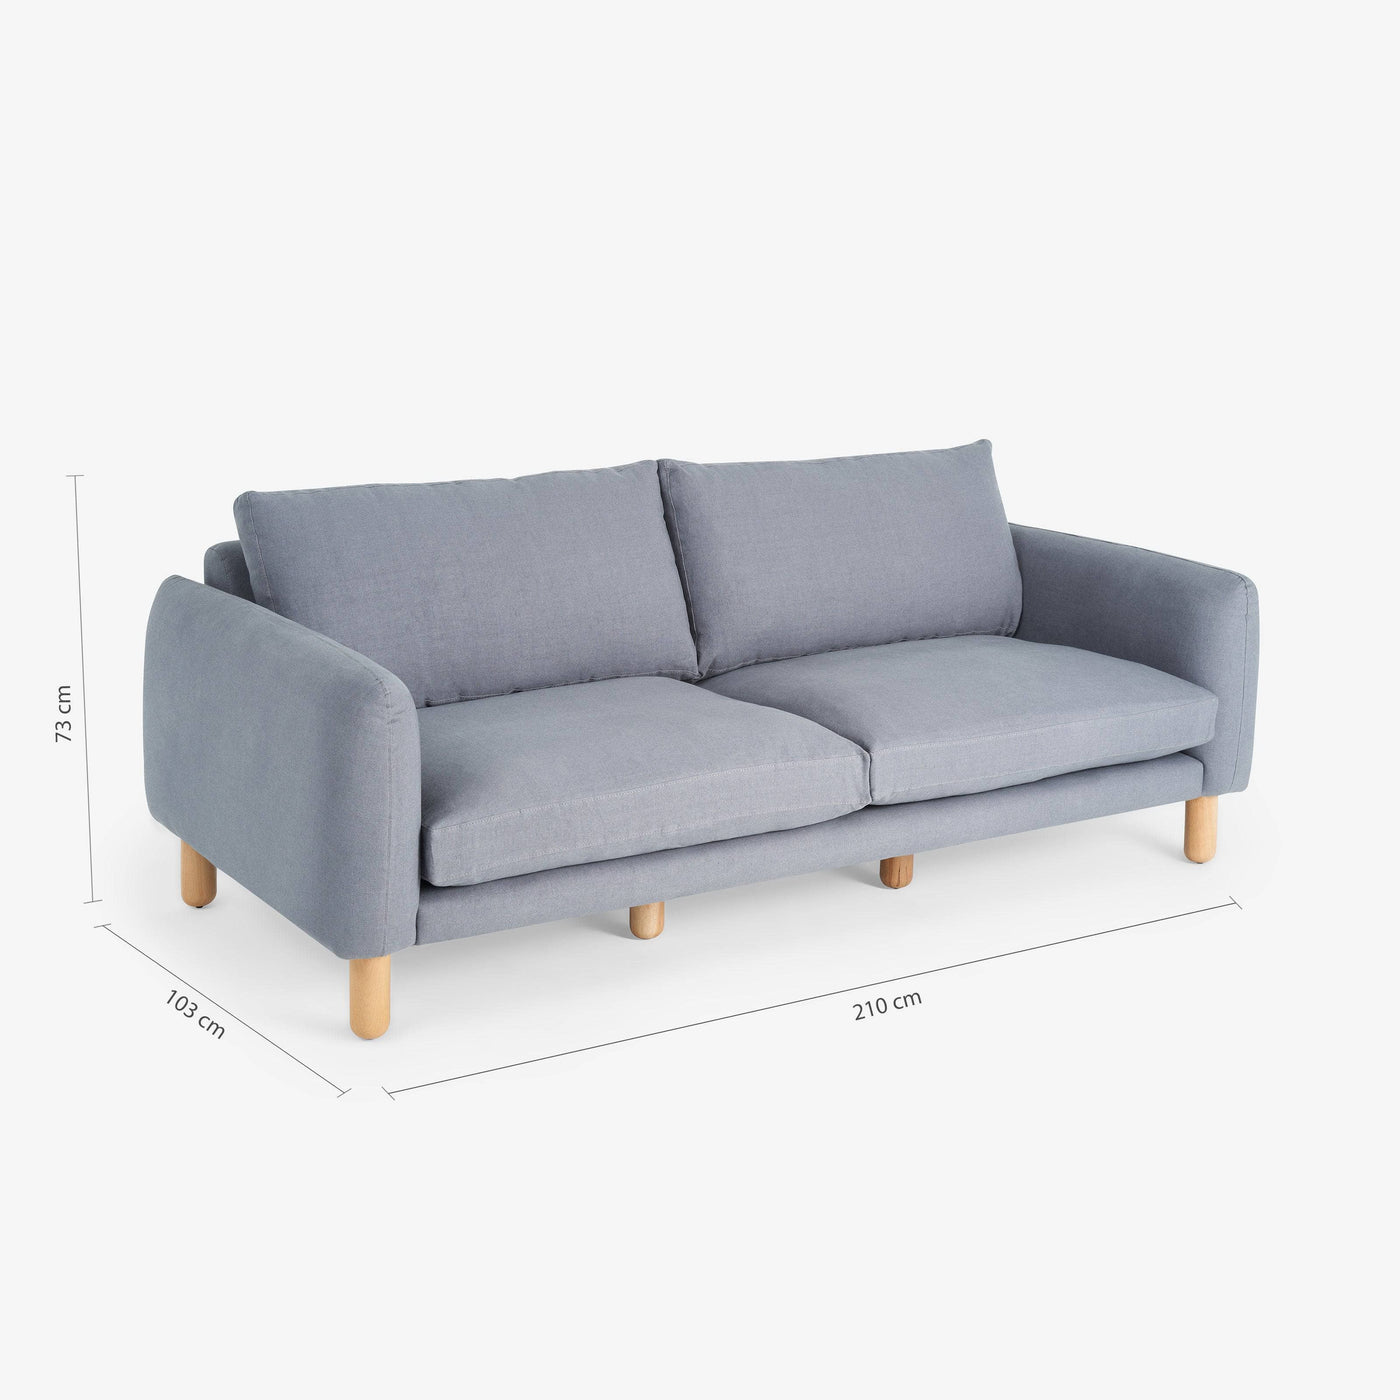 Sunso Linen 3 Seater Sofa, Grey - 2